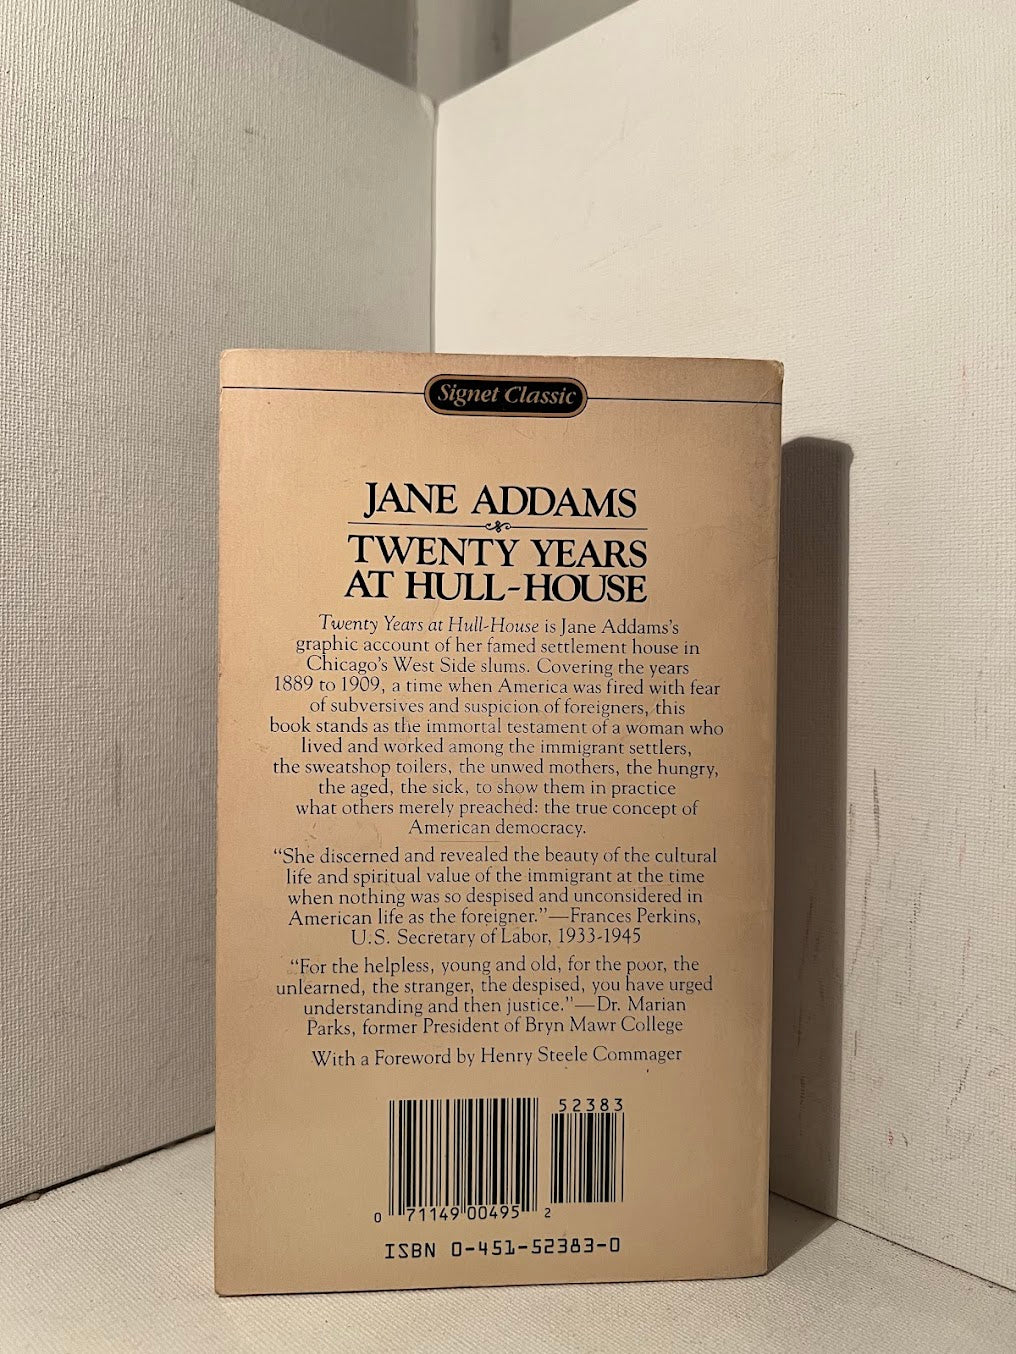 Twenty Years at Hull House by Jane Addams